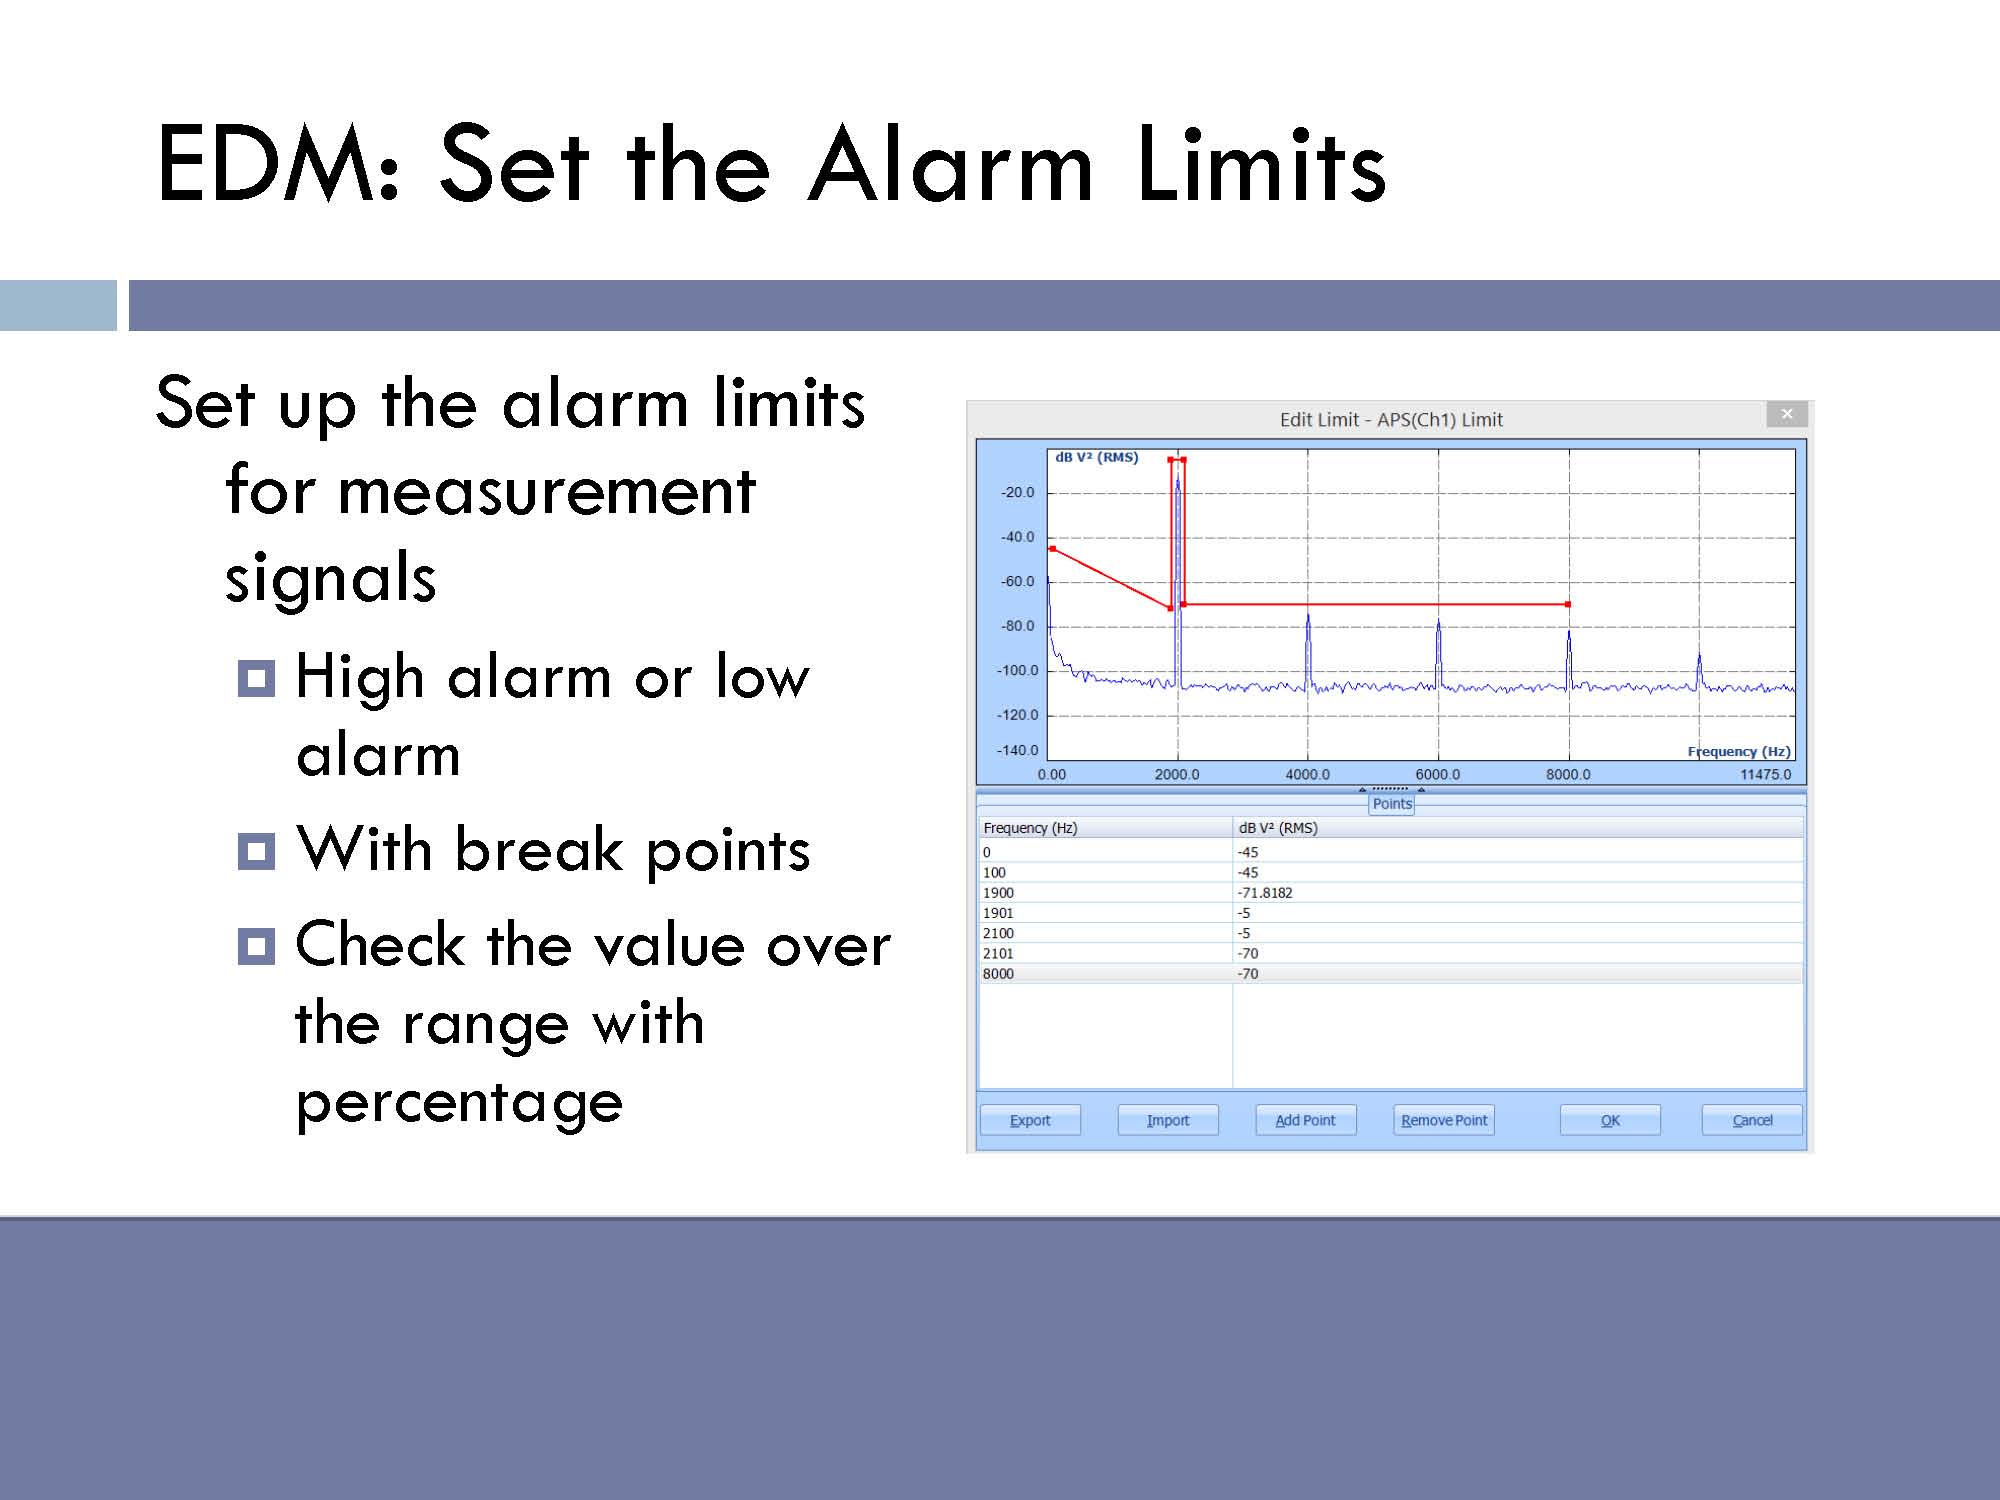    
  
 Normal 
 0 
 
 
 
 
 false 
 false 
 false 
 
 EN-US 
 X-NONE 
 X-NONE 
 
  
  
  
  
  
  
  
  
  
  
  
 
 MicrosoftInternetExplorer4 
 
  
  
  
  
  
  
  
  
  
  
  
  
   Set up alarm limits for measurement signals. High alarm or low 